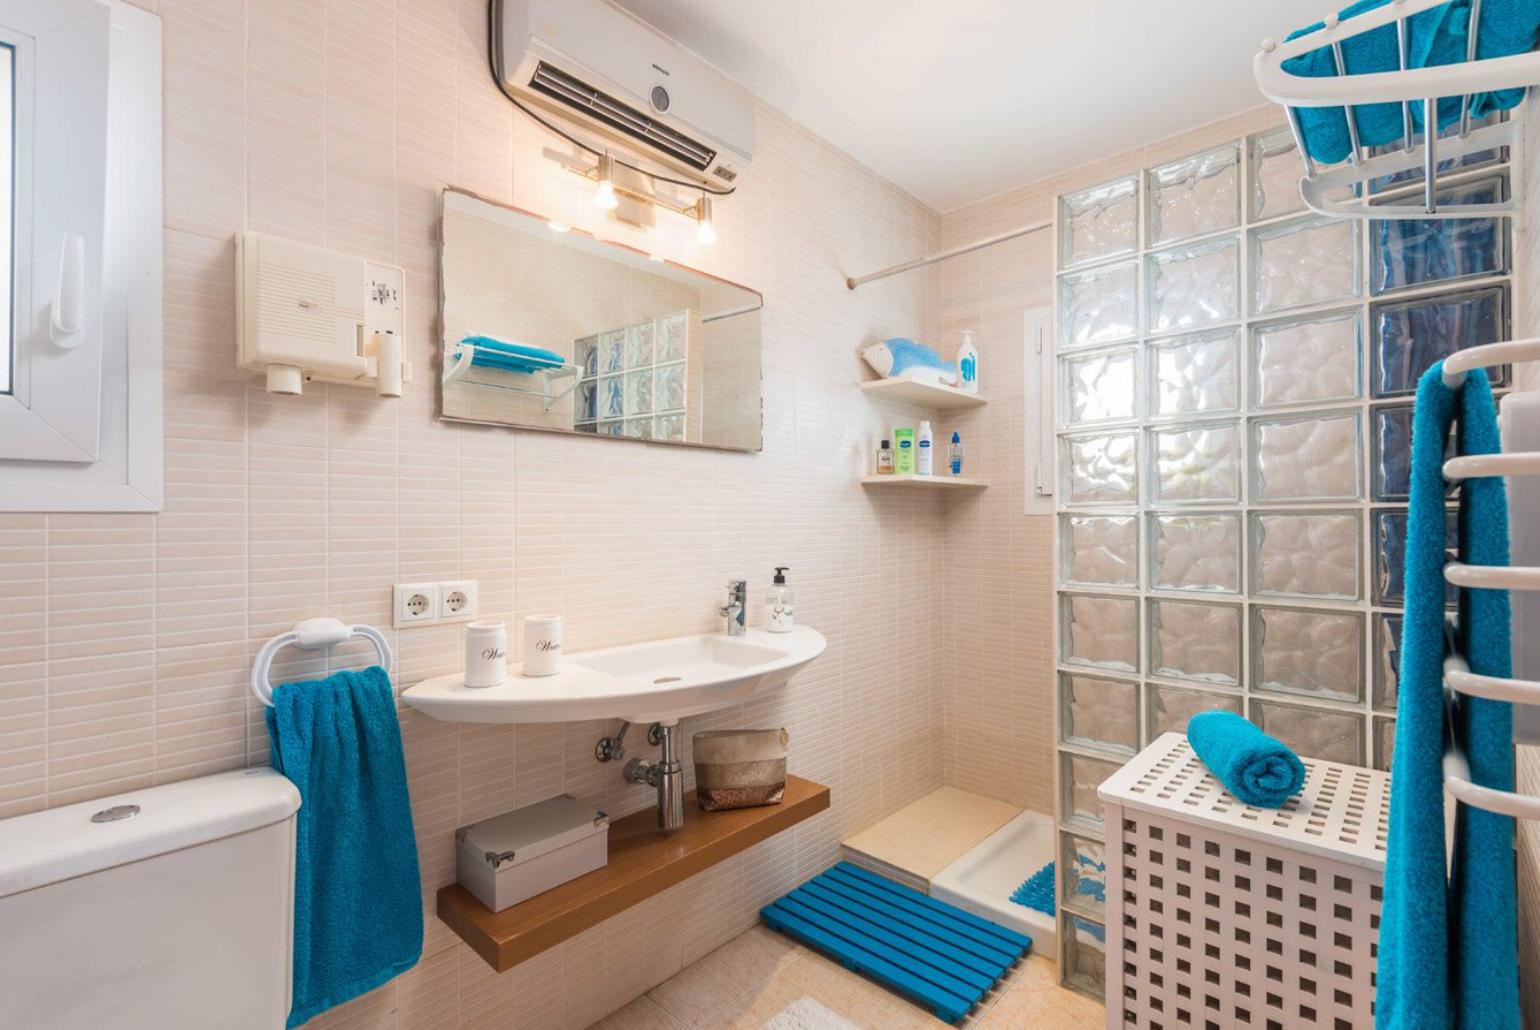 Bathroom with bath and overhead shower